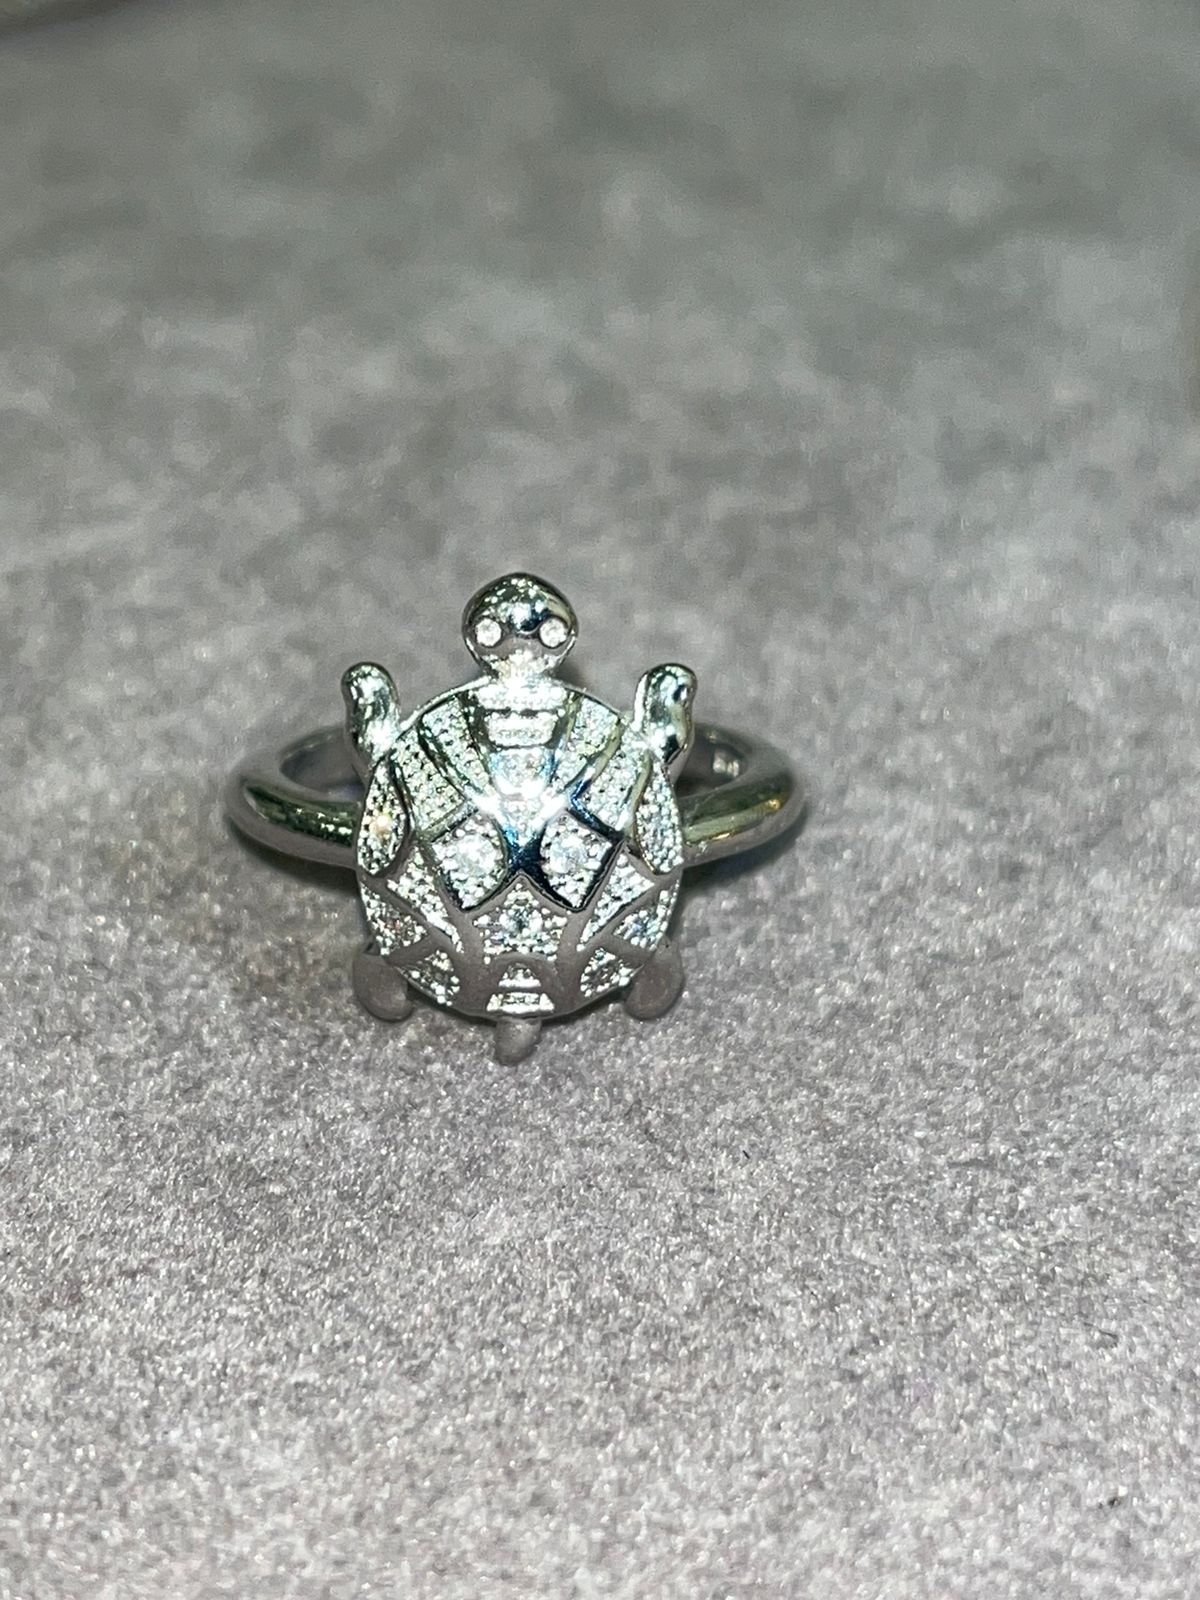 Lucky Turtle Tortoise Ring in Silver 925 - PROSPERITY & LUCK